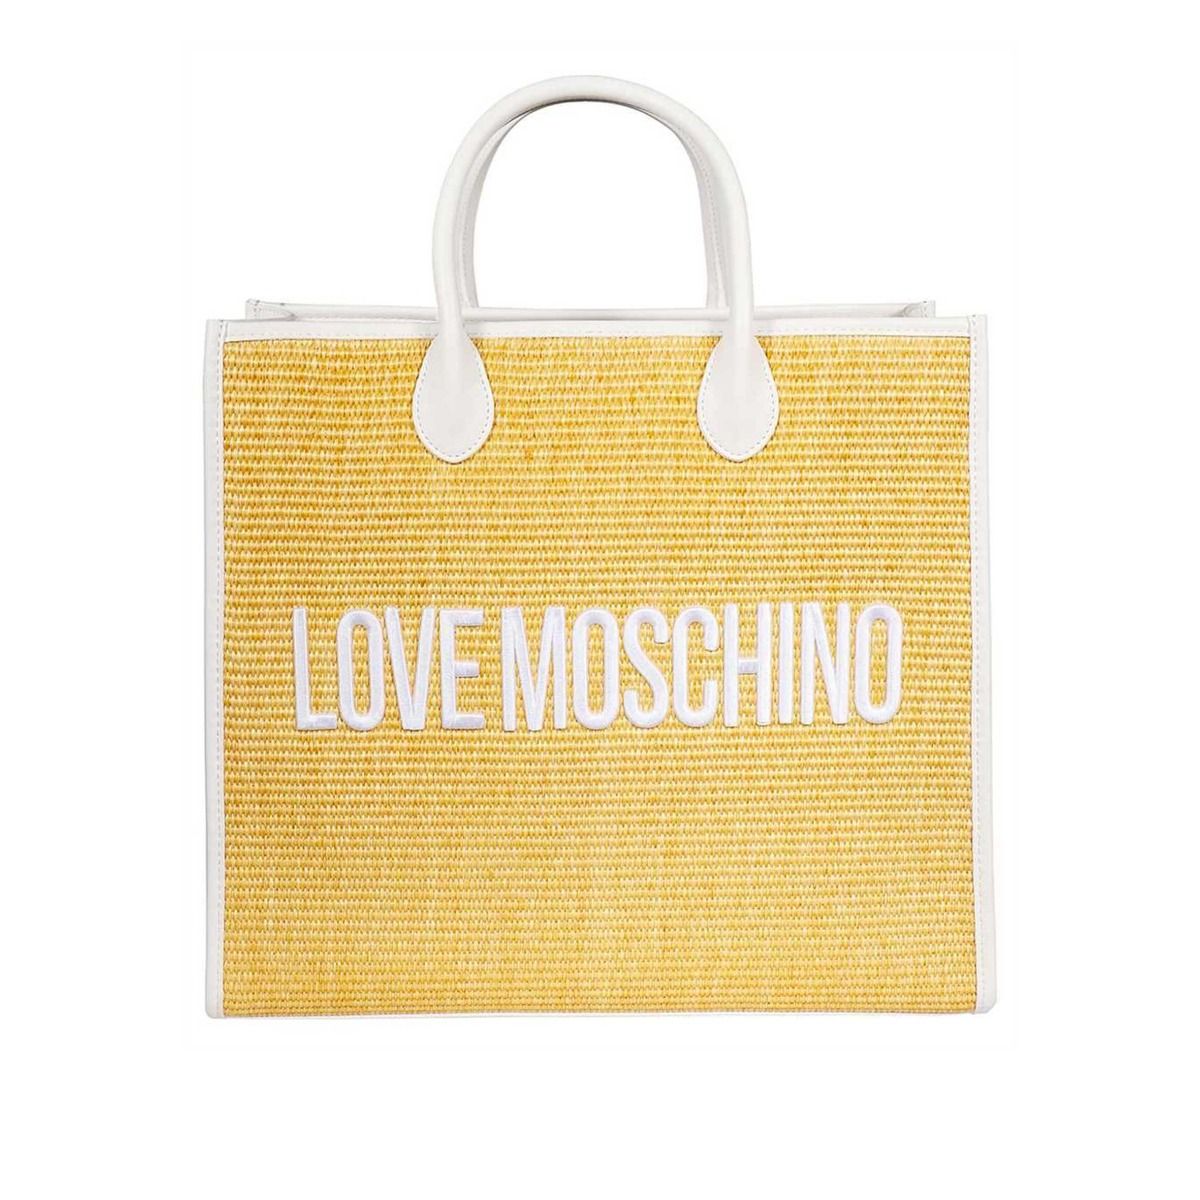 LOVE MOSCHINO SHOPPER BAG